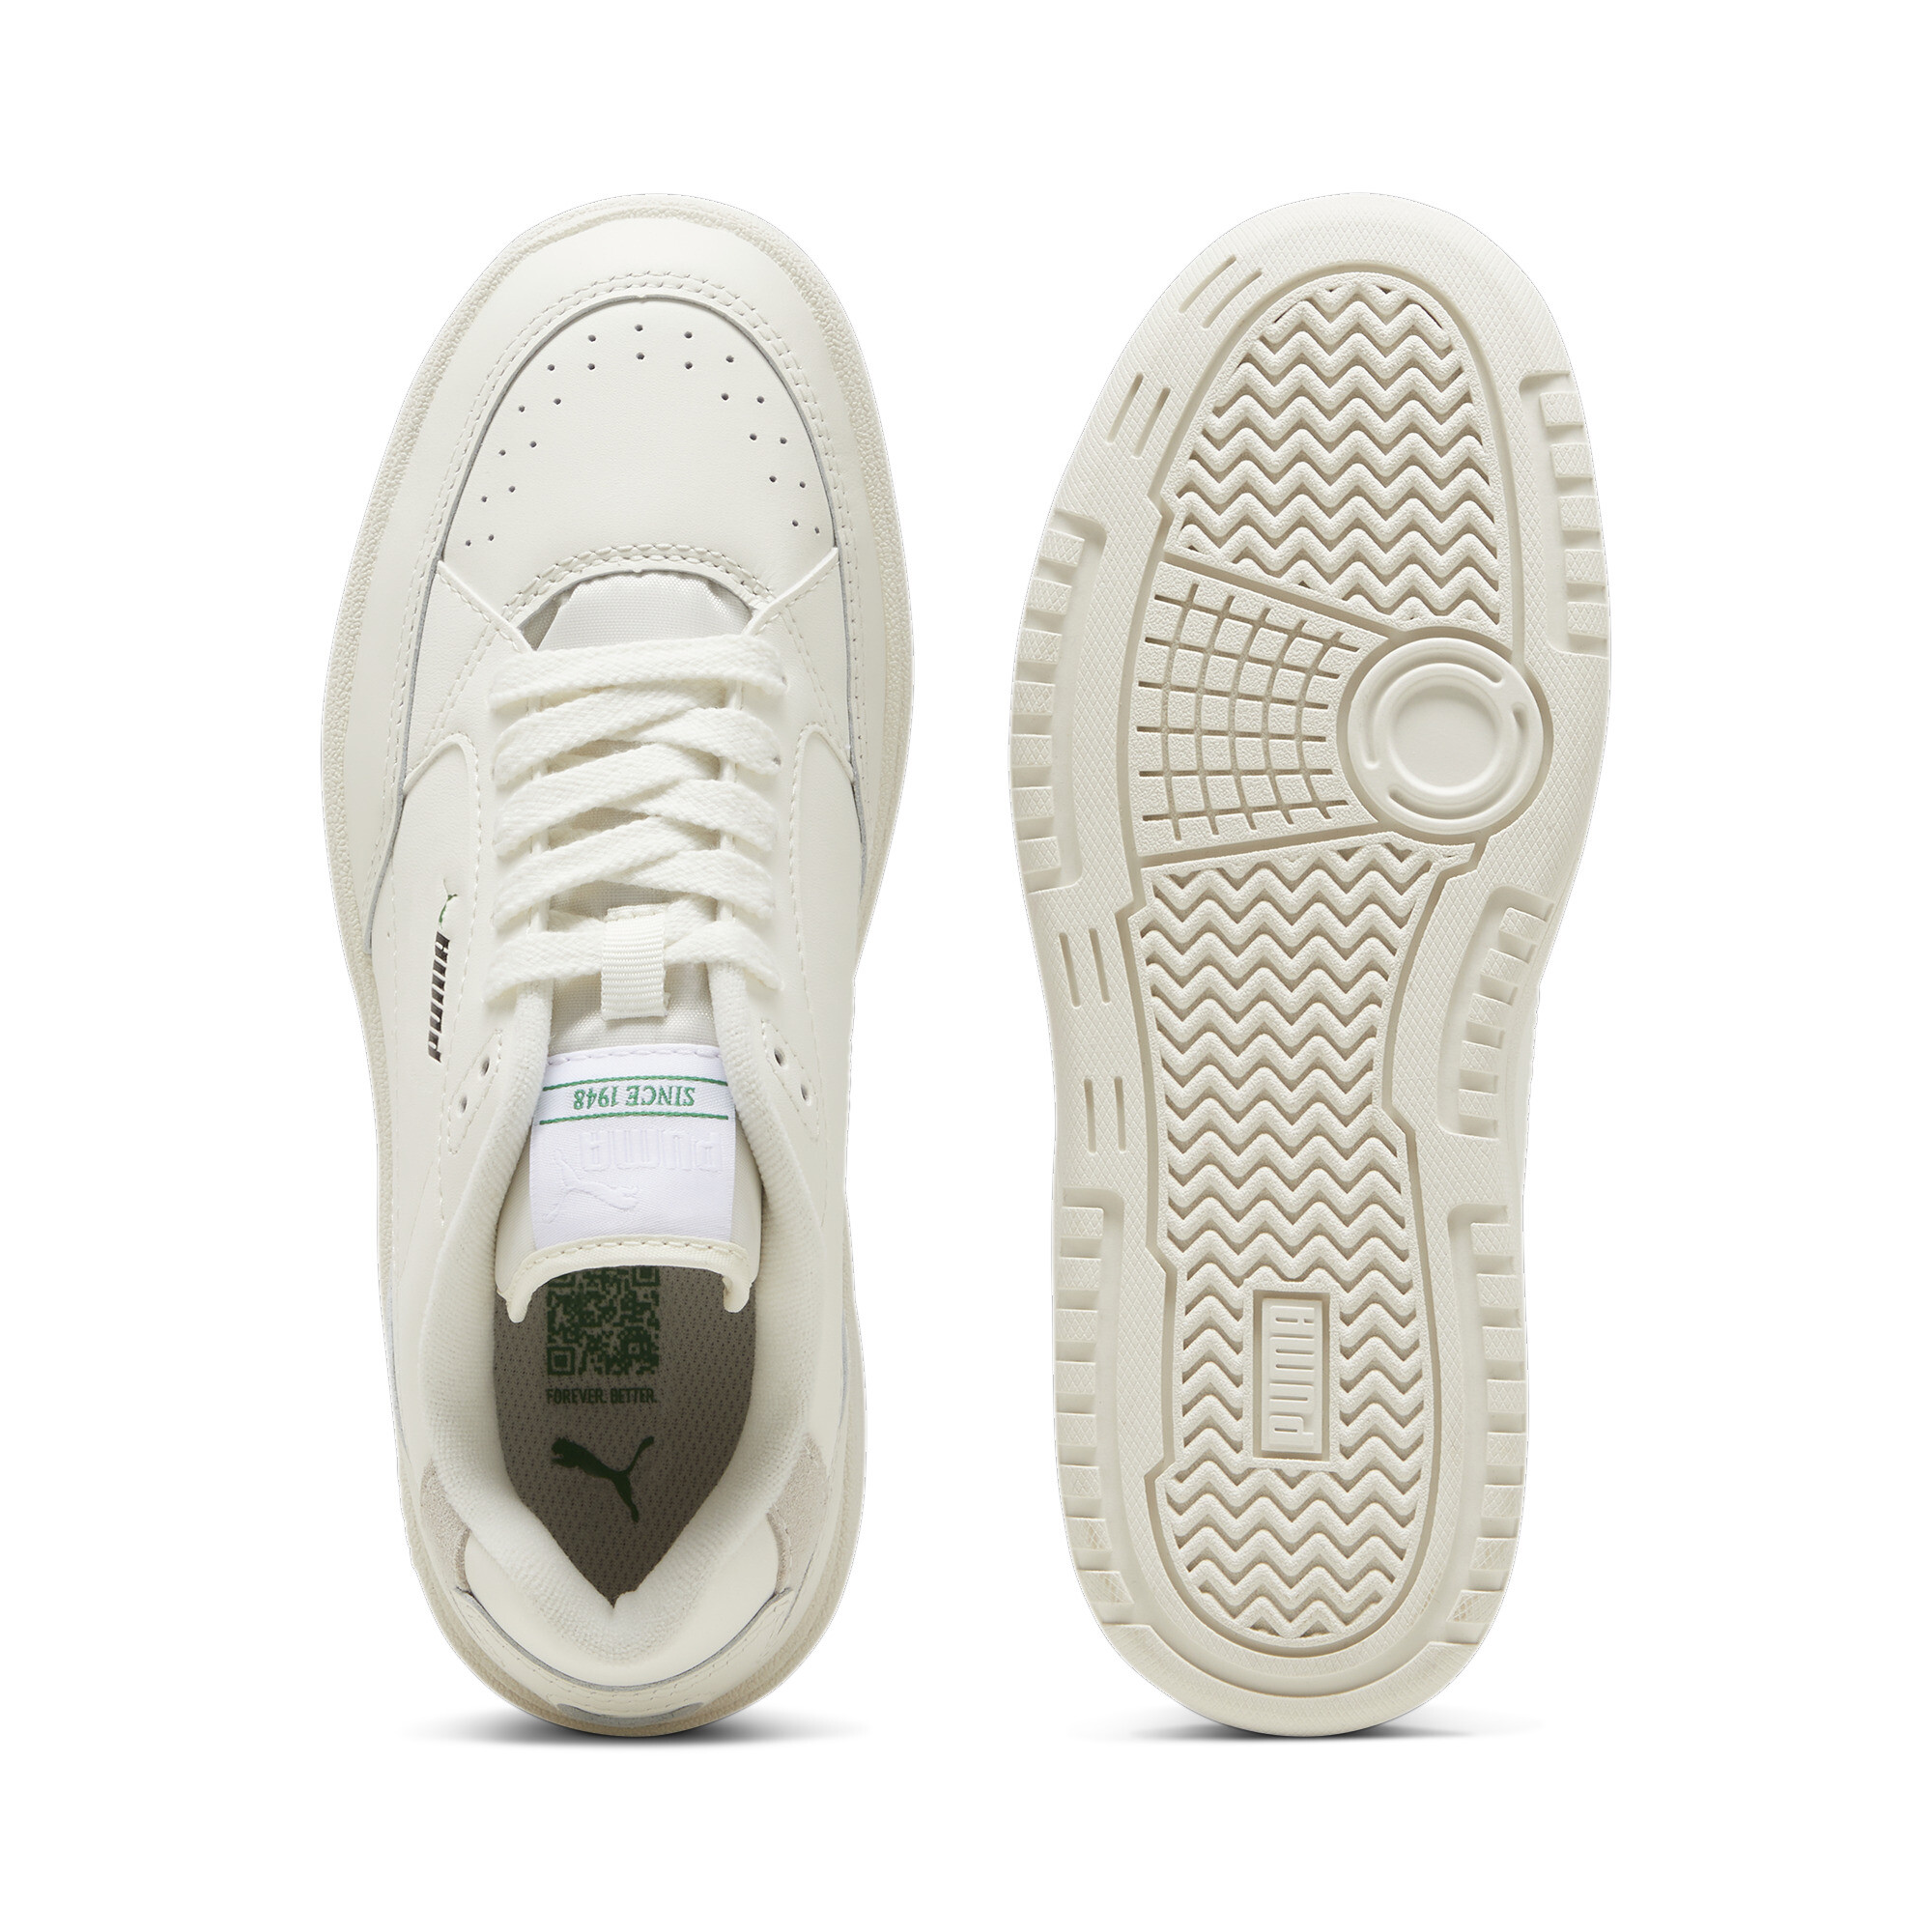 Women's Puma Doublecourt's Sneakers, White, Size 40.5, Shoes